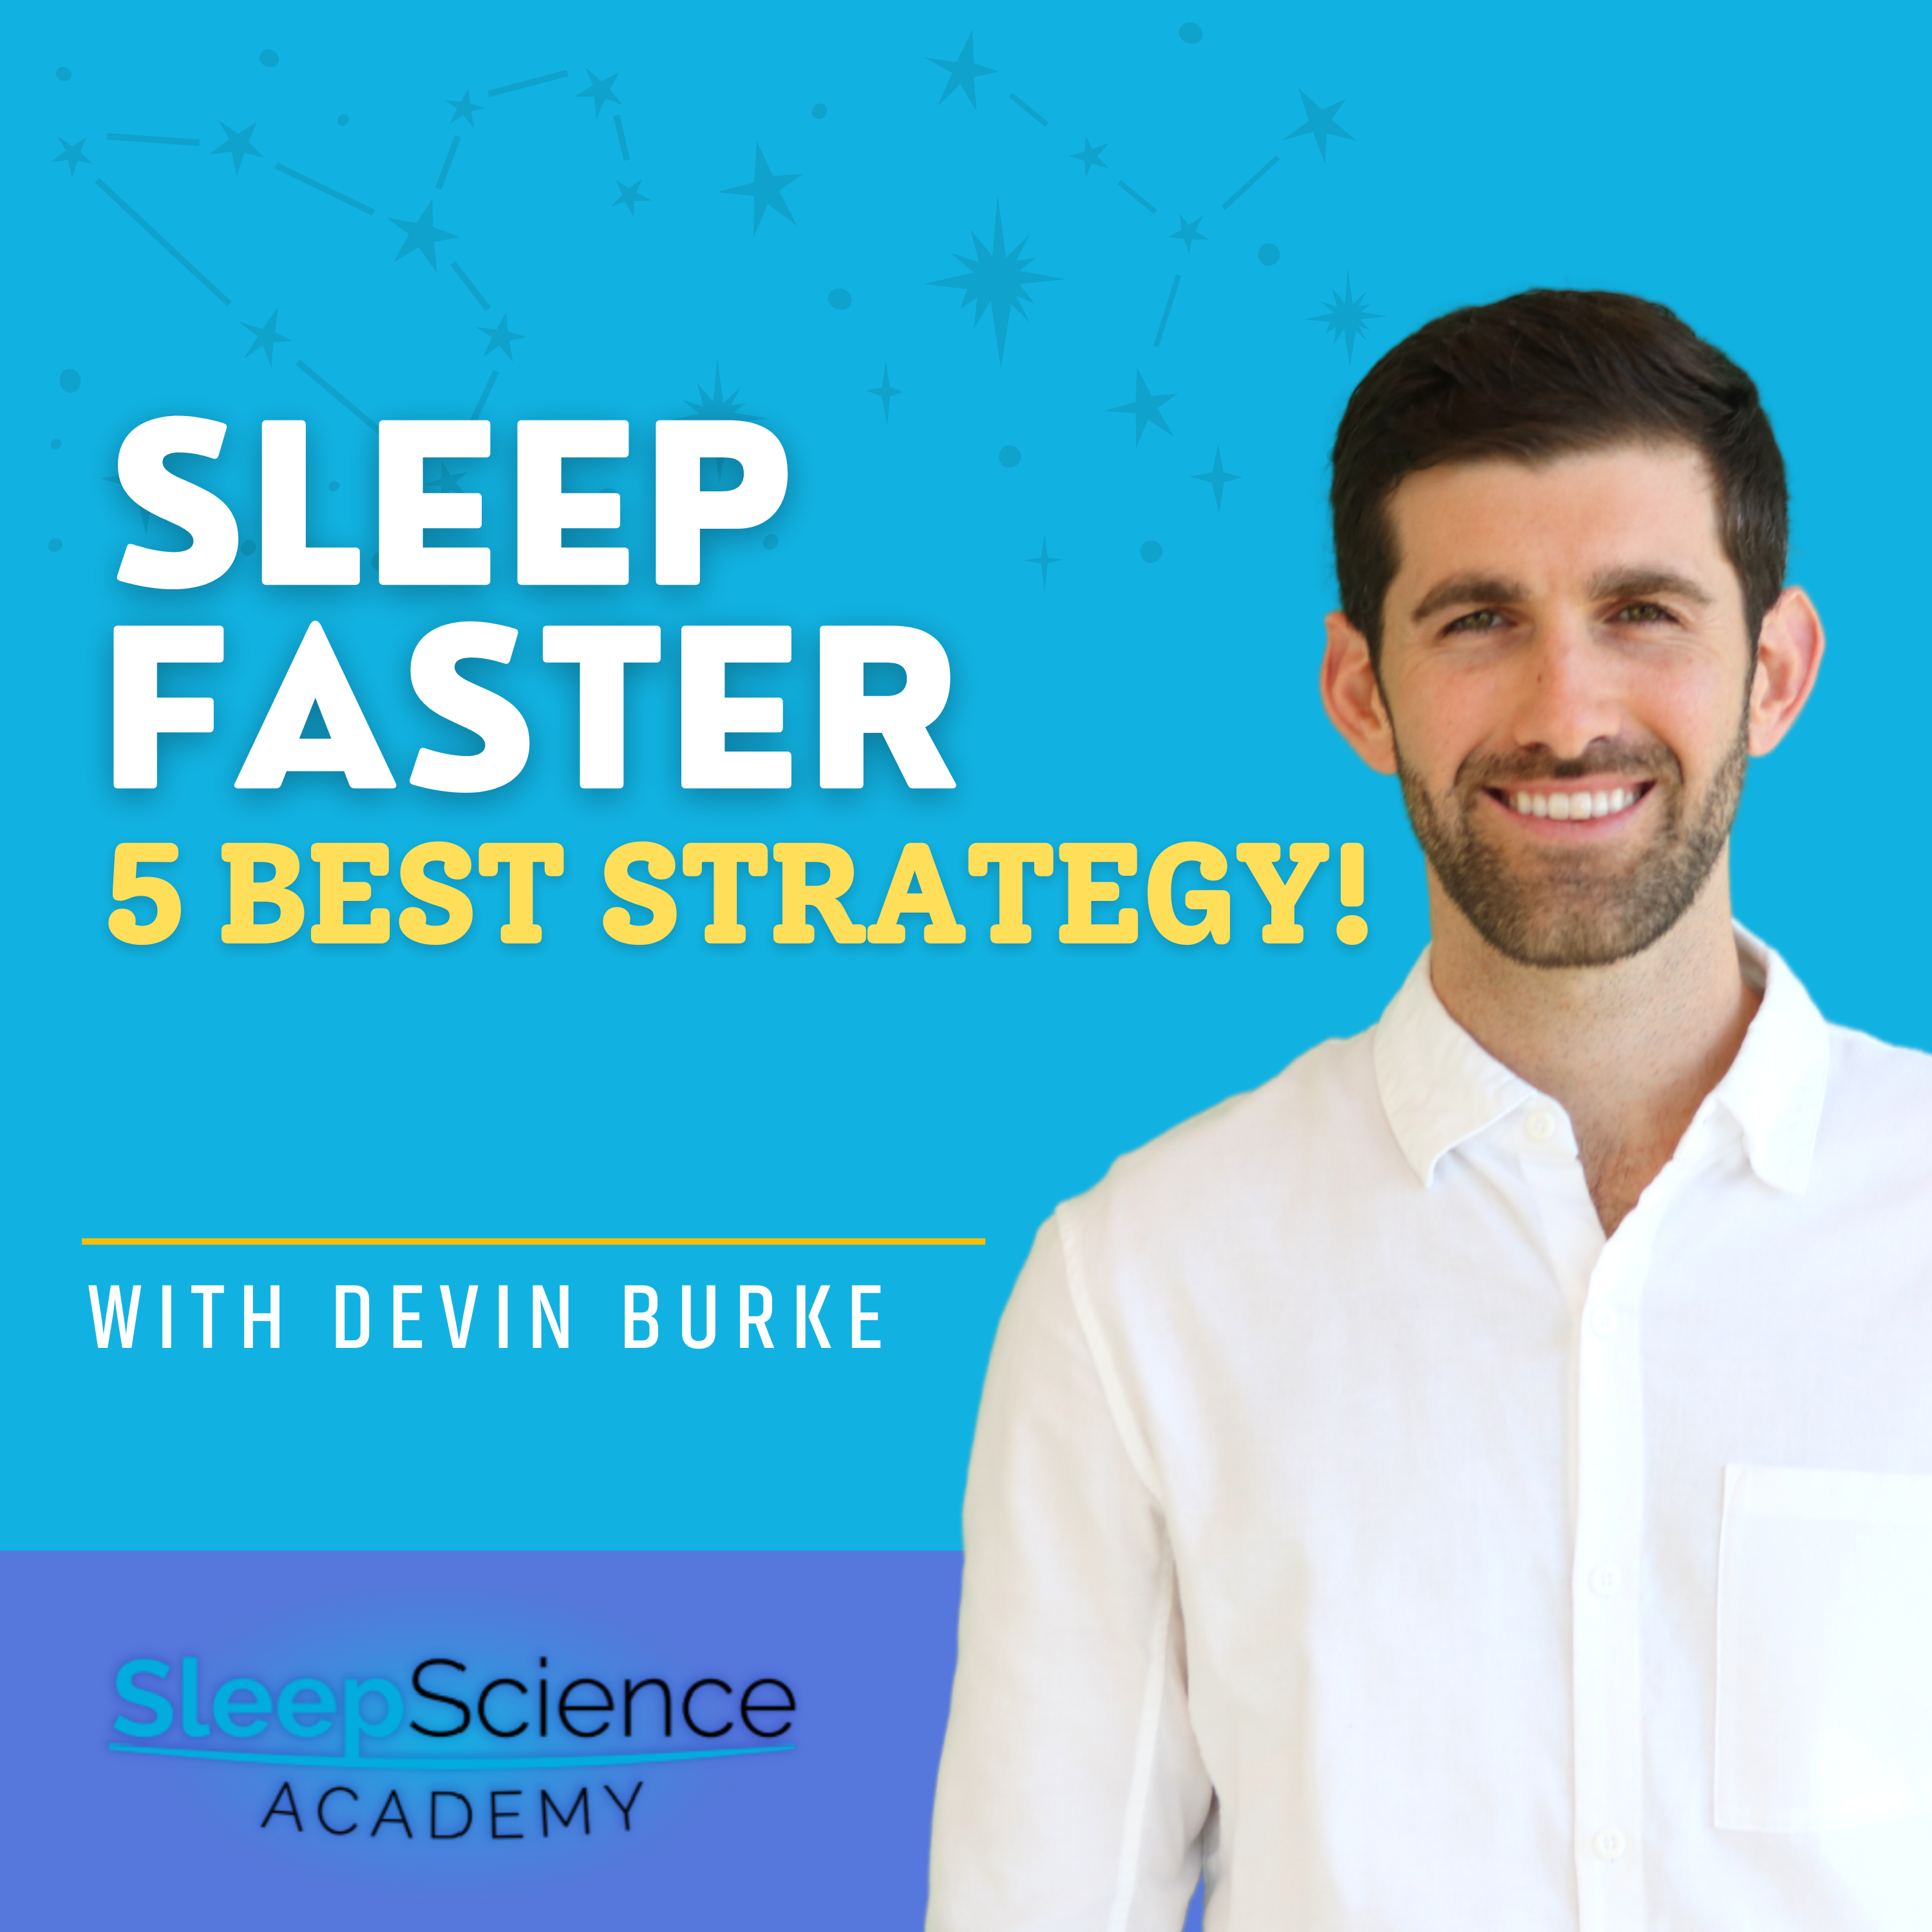 5 Step Strategy to Fall Asleep Faster(FREE SLEEP MASTERCLASS)